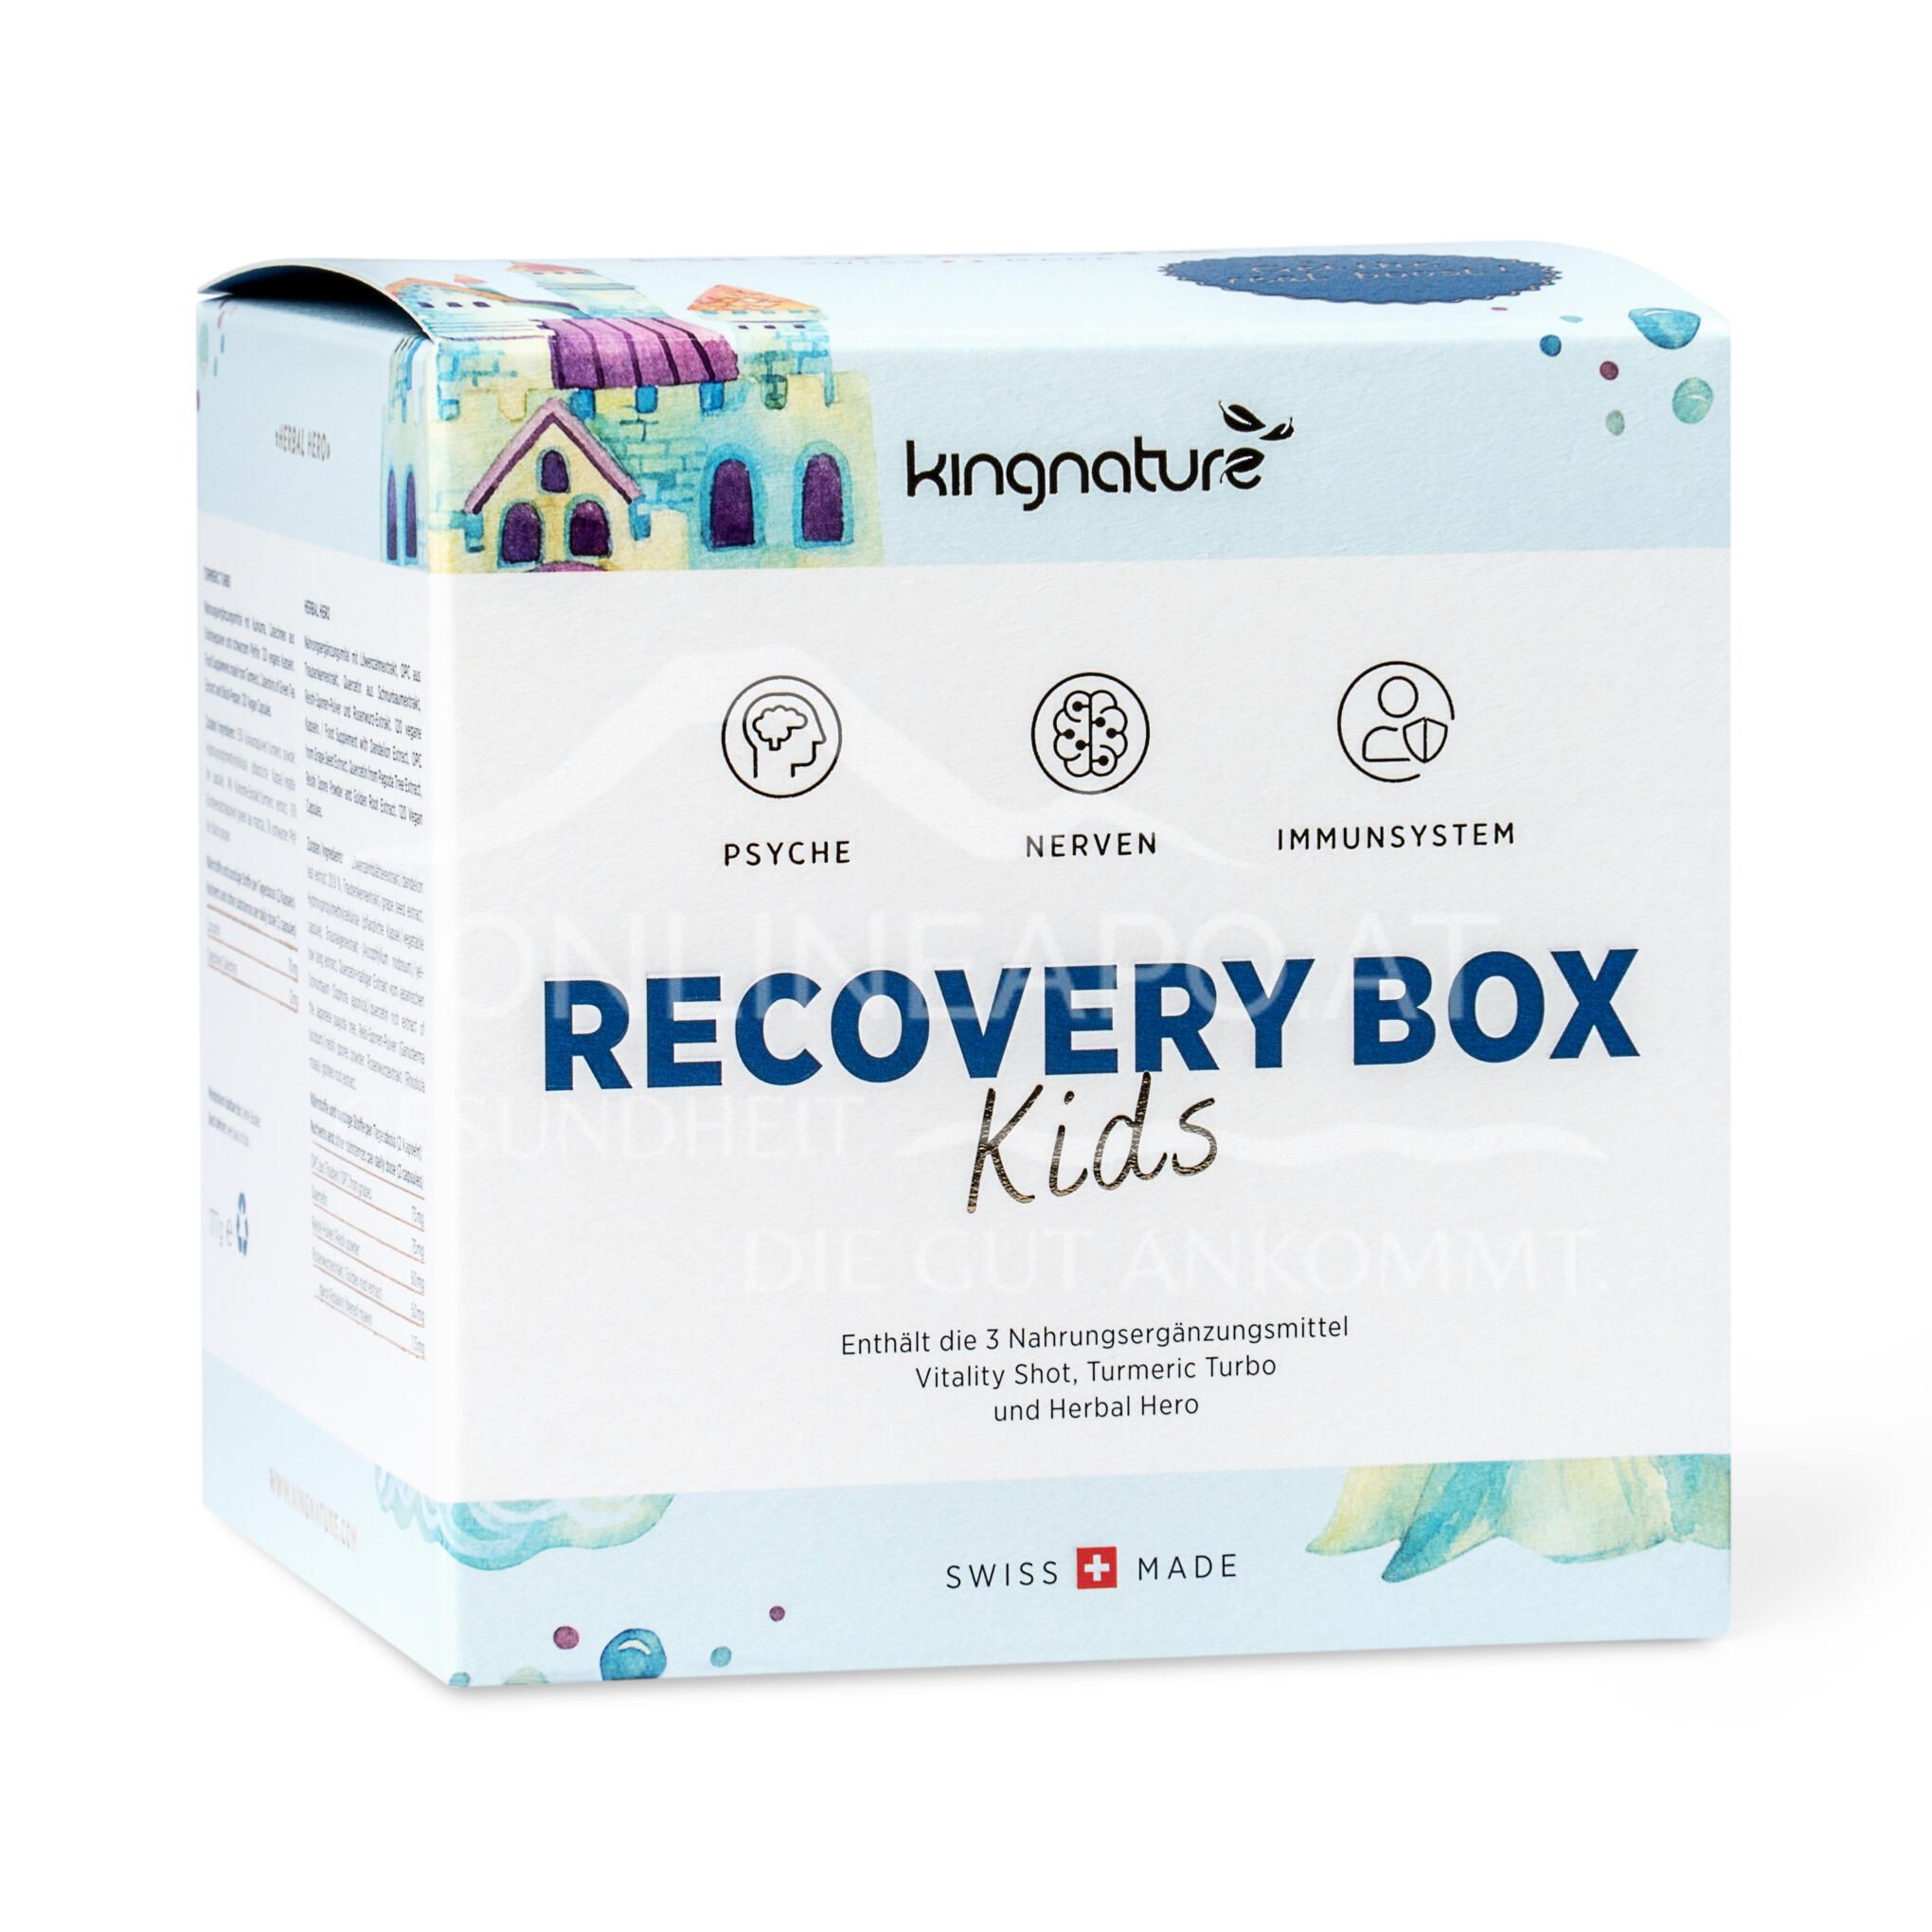 Kingnature Recovery Box Kids